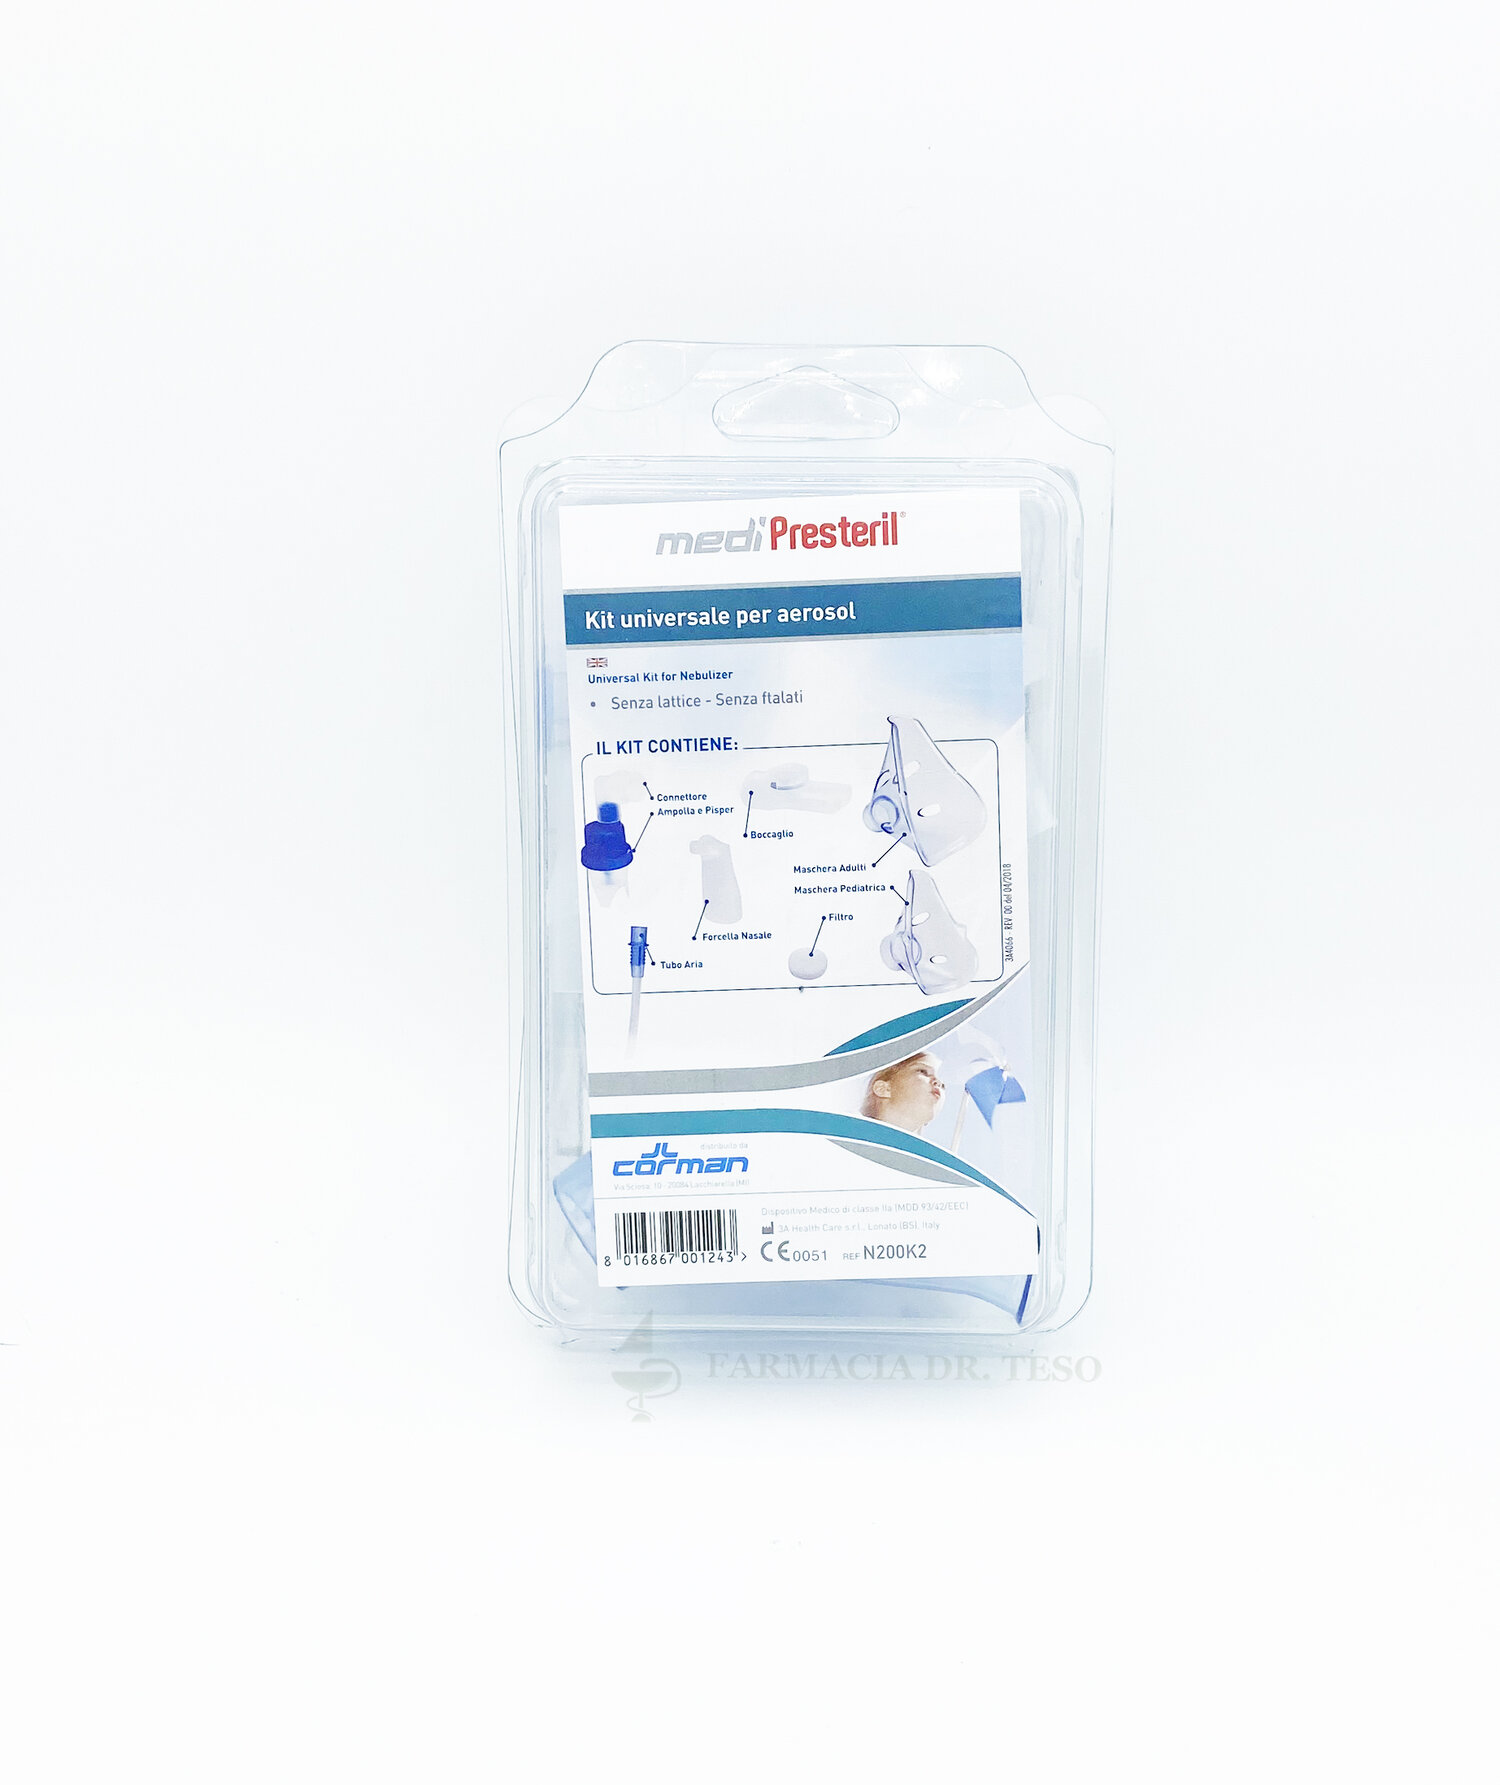 MediPresteril, Kit Universale per Aerosol — Farmacia dott. Teso